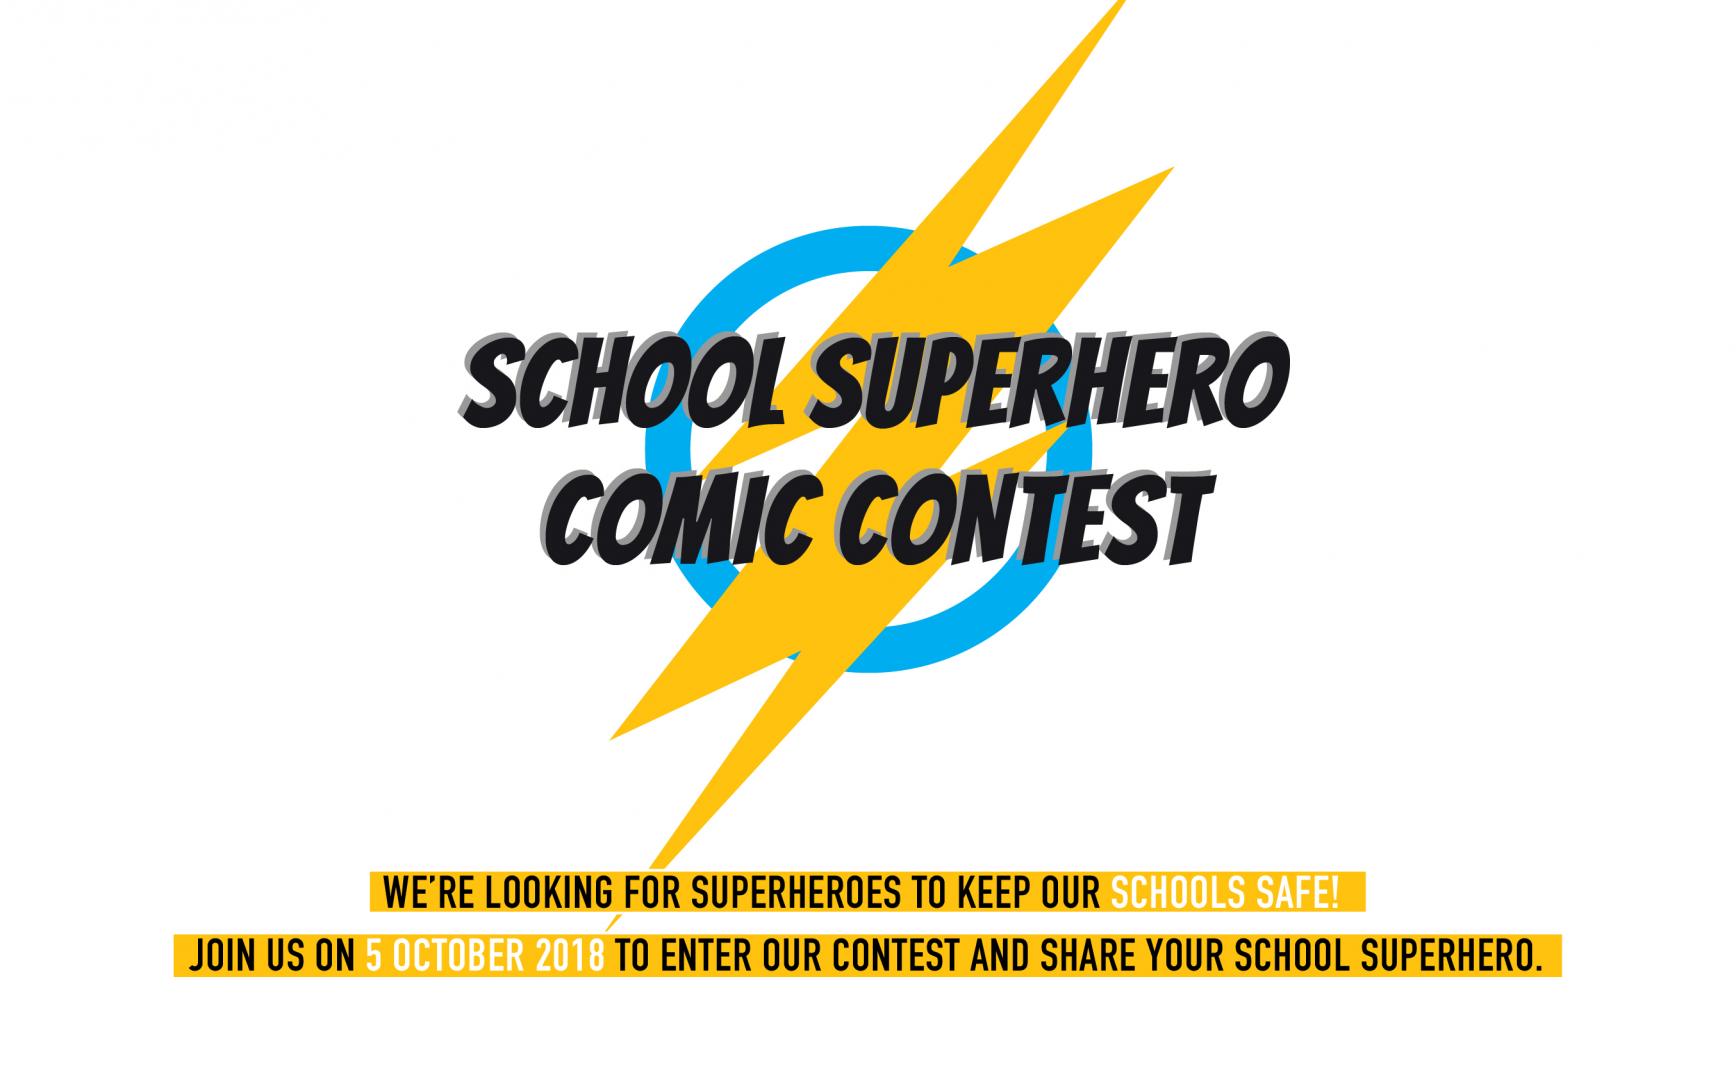 UNICEF School Superhero Comic Contest 2018